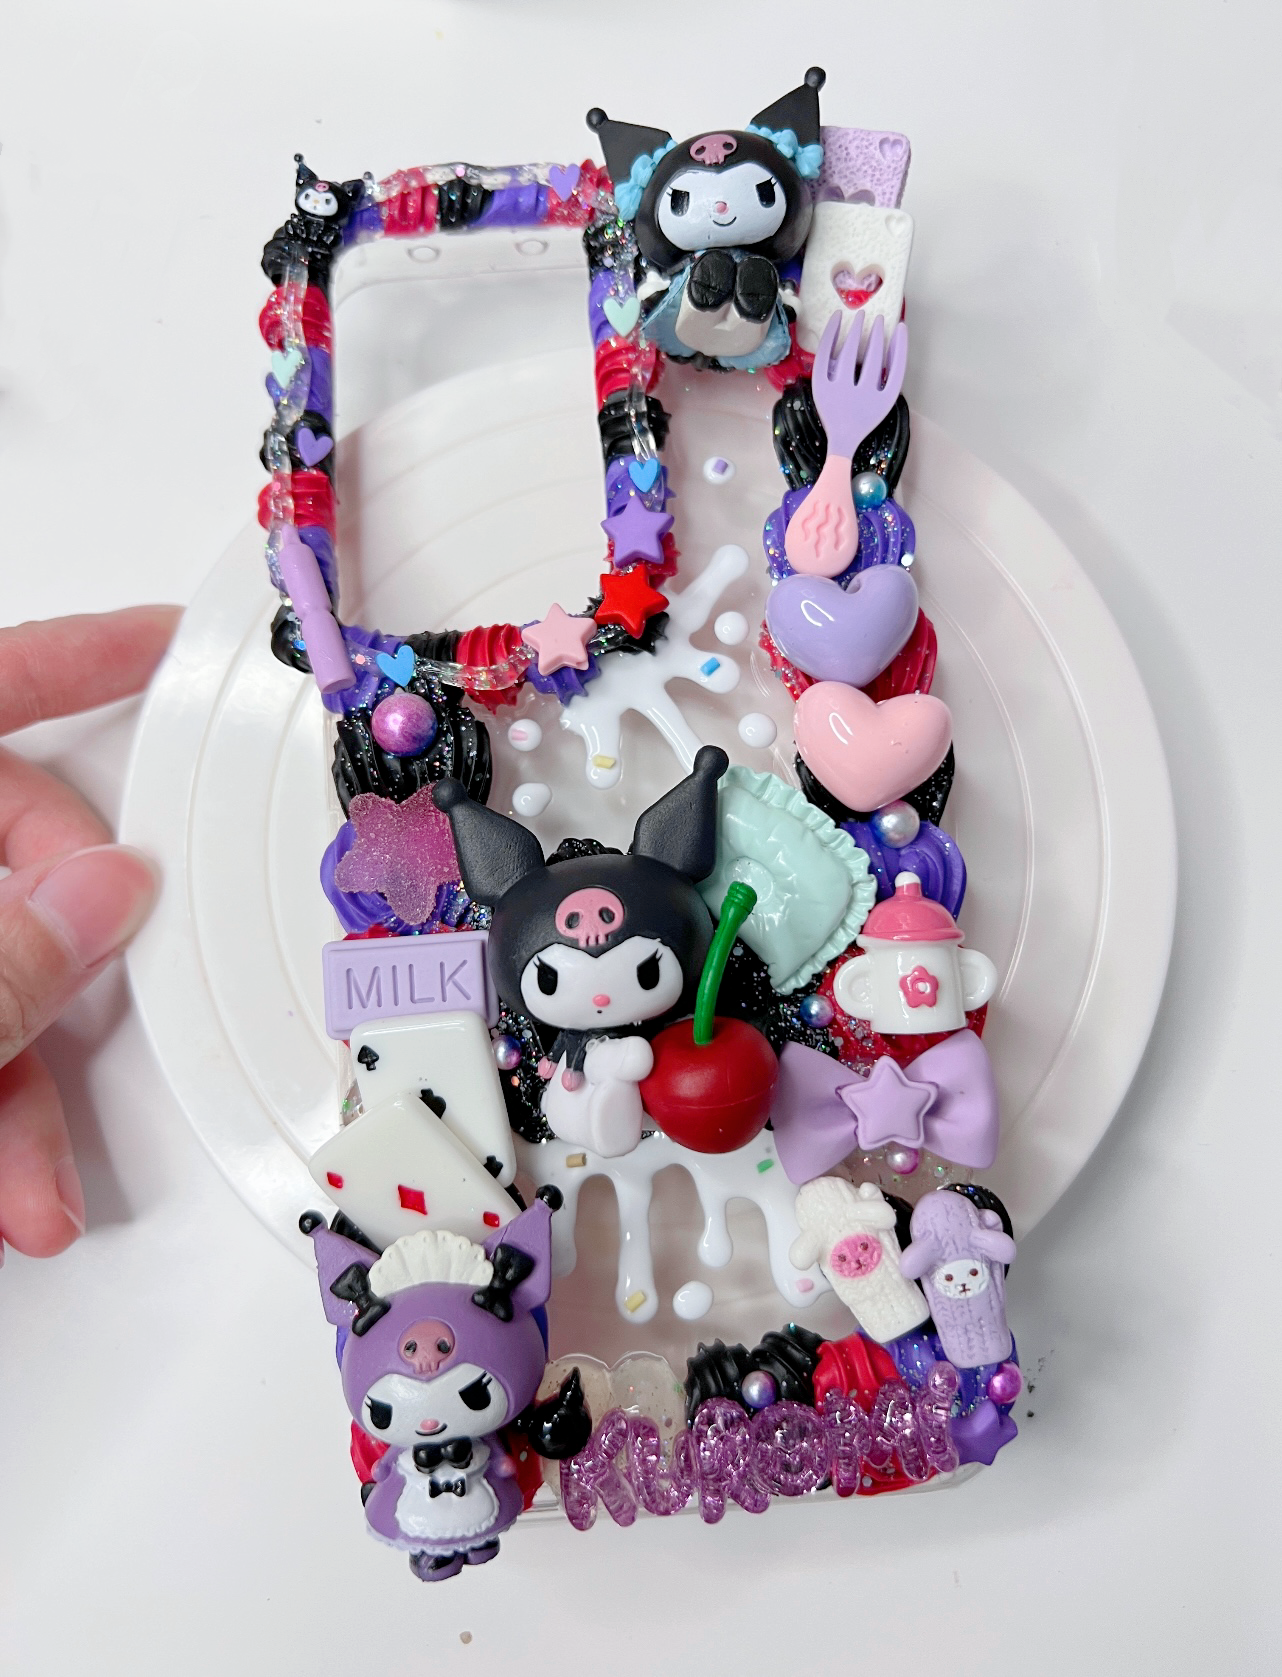 Whipped cream phone cases,cute phone case,custommade case,Decoden Phone Case, Bunny iPhone Case, 3D Anime Phone Case, Kawaii Whip Cream Case